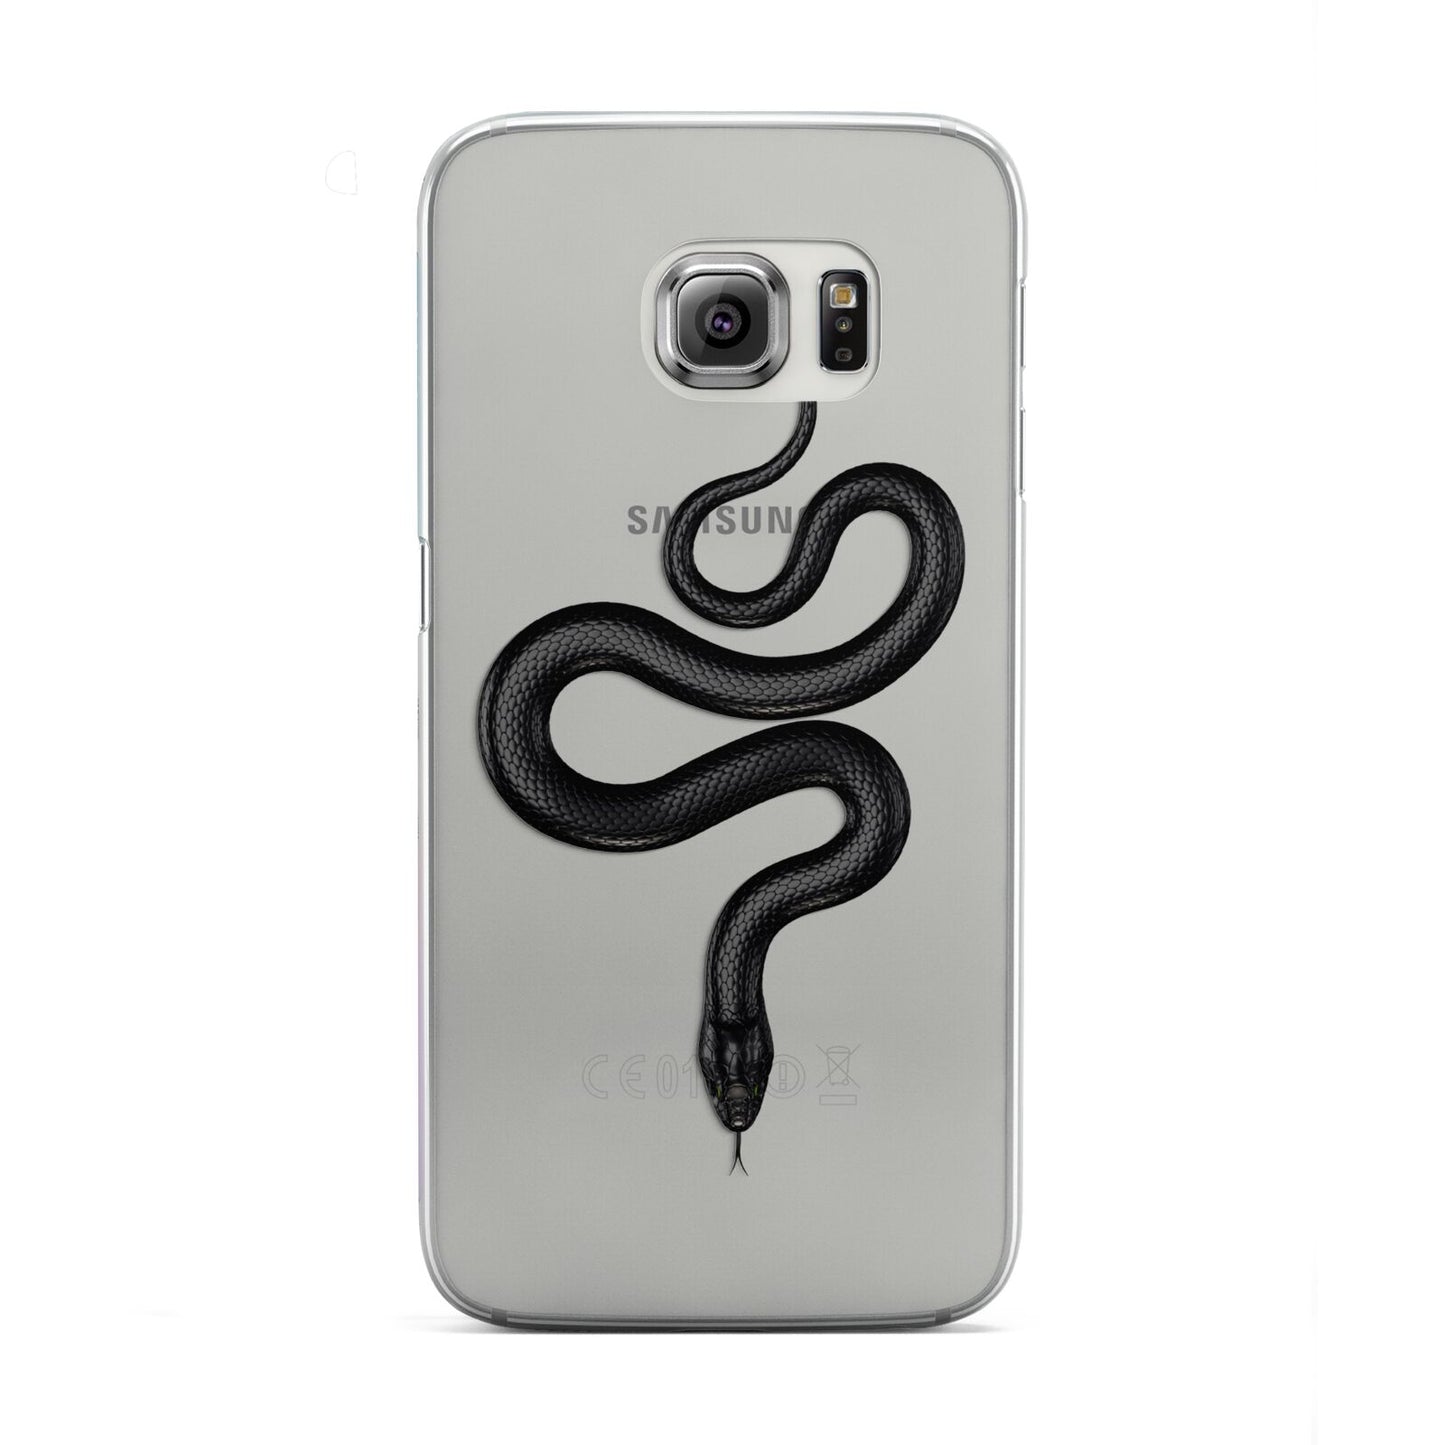 Snake Samsung Galaxy S6 Edge Case